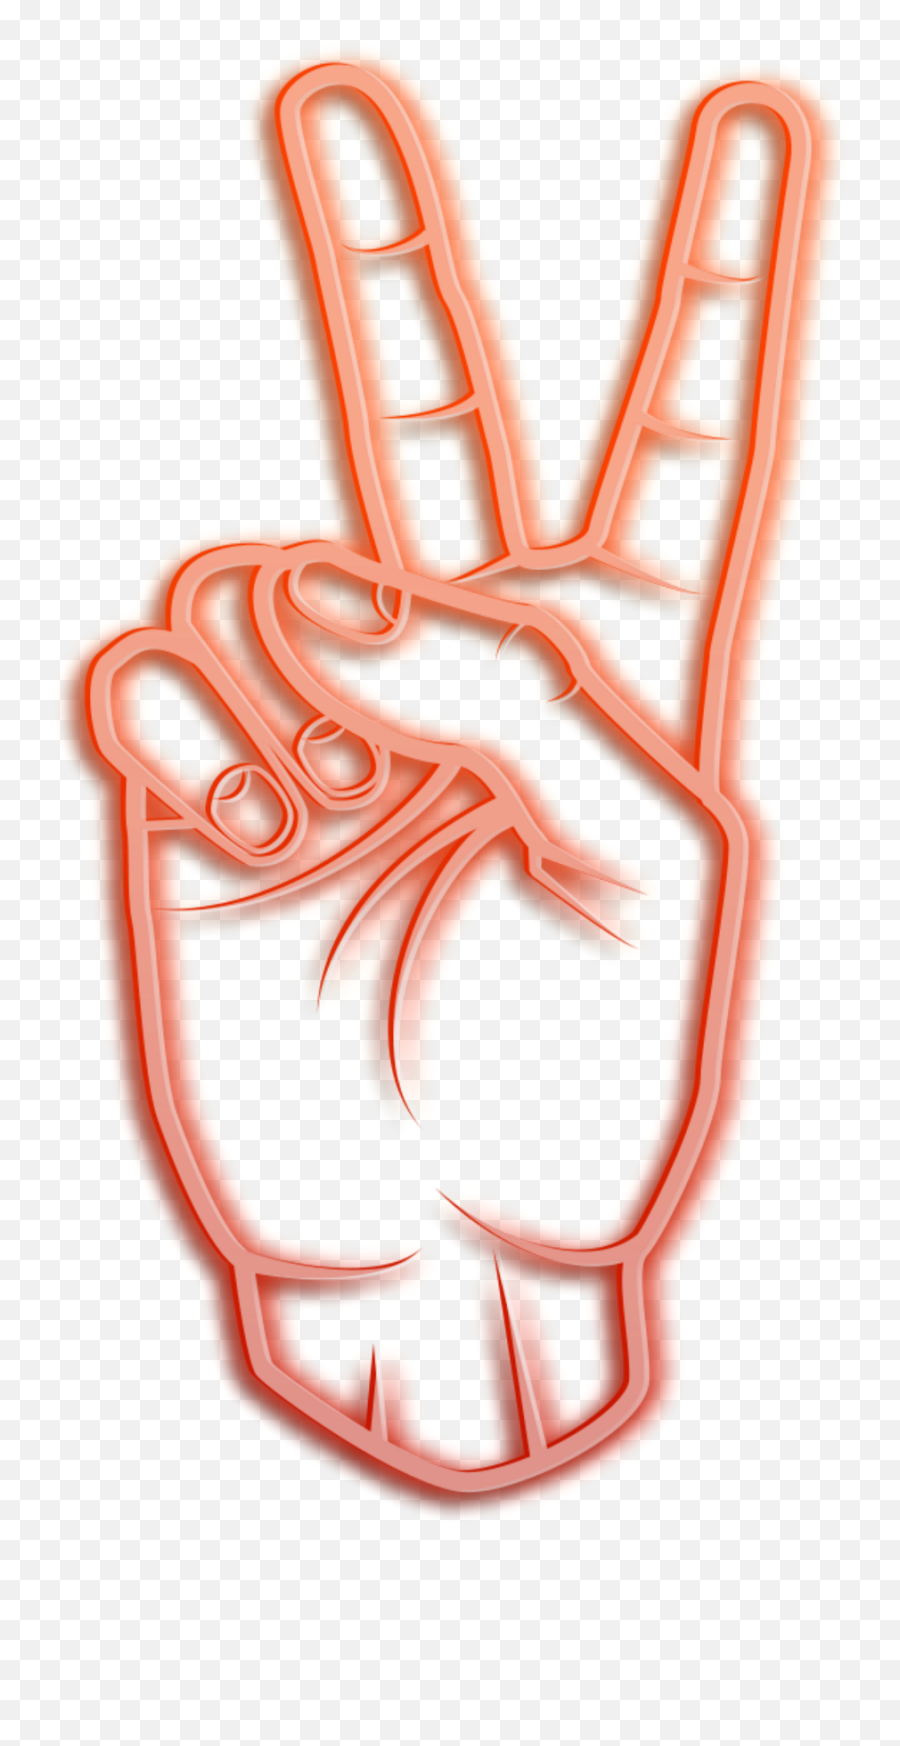 Neon Orange Peace Glow Peacestickers - Portable Network Graphics Emoji,Peace Finger Emoji